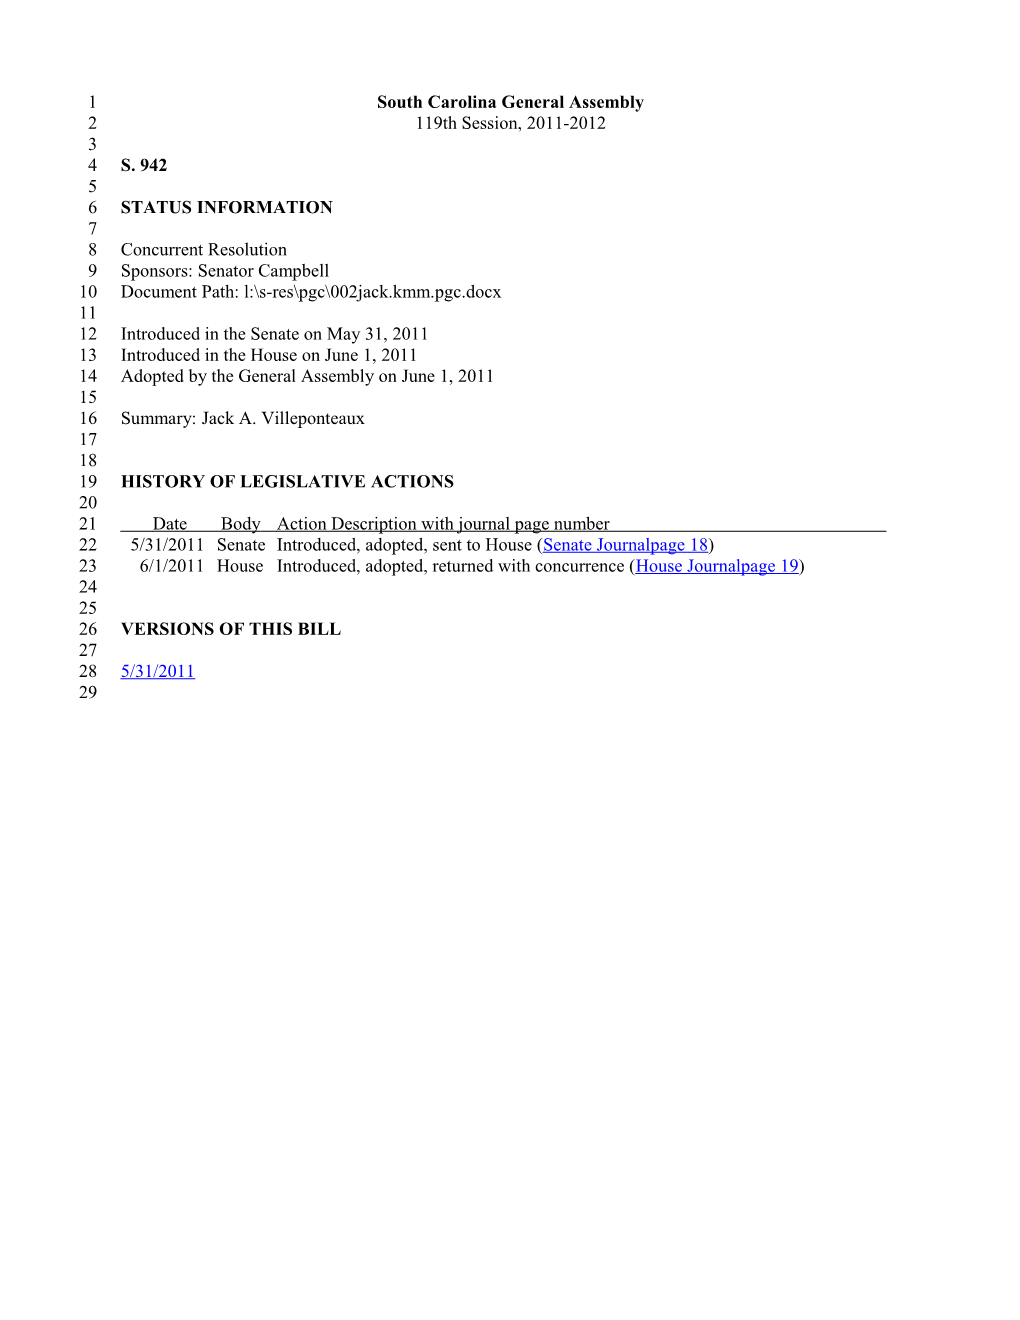 2011-2012 Bill 942: Jack A. Villeponteaux - South Carolina Legislature Online